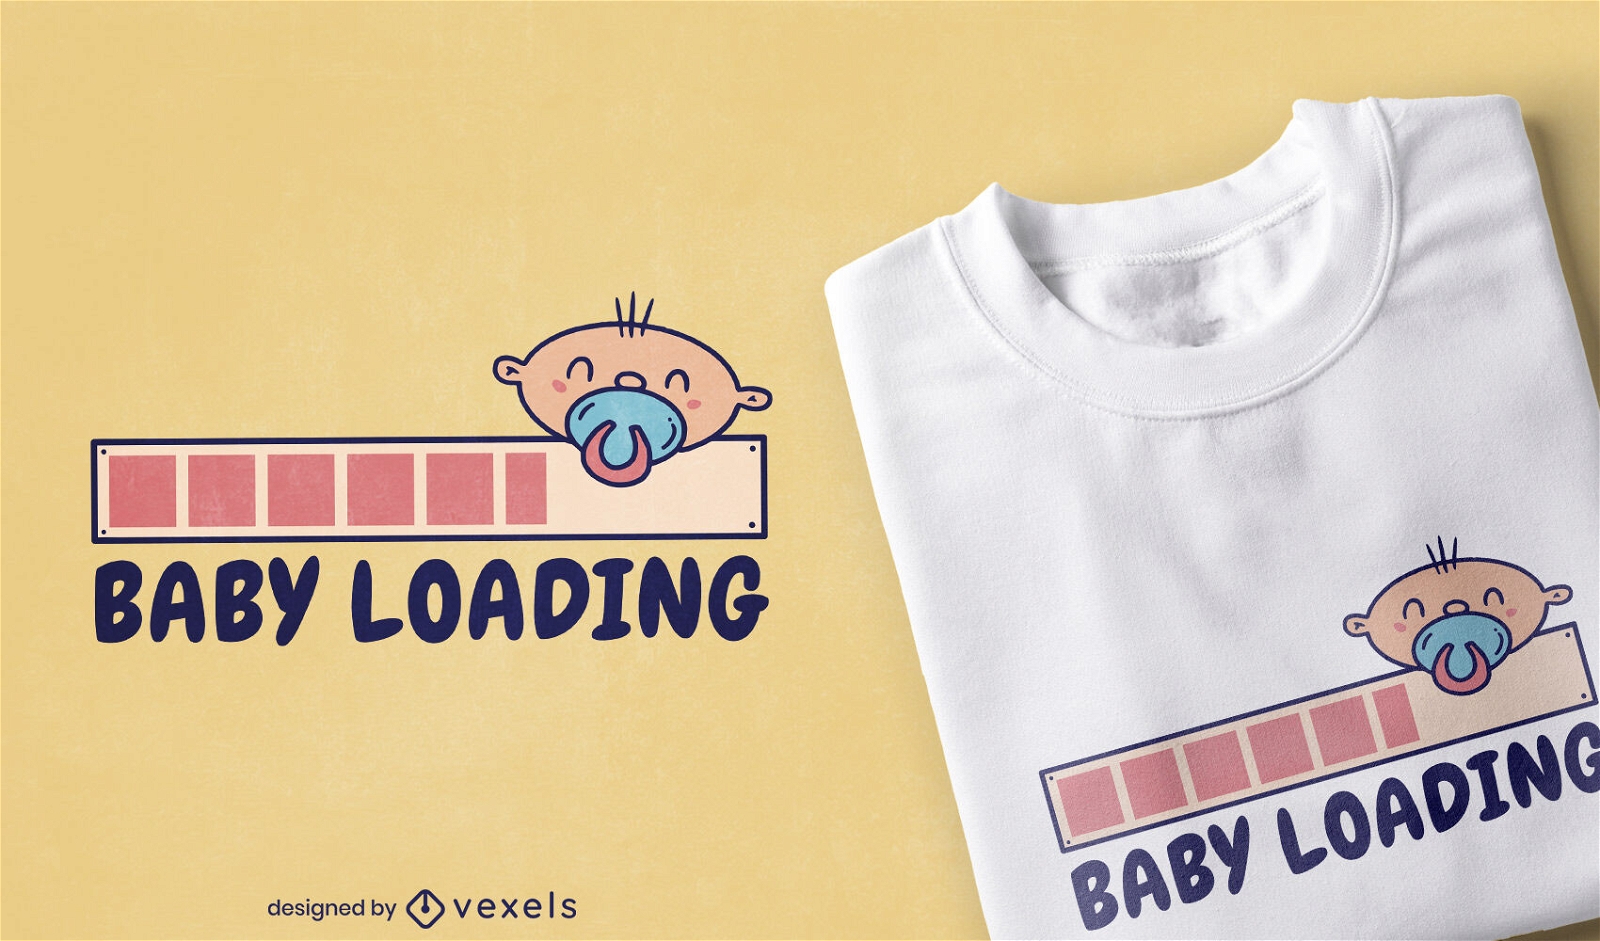 Baby loading bar funny t-shirt design